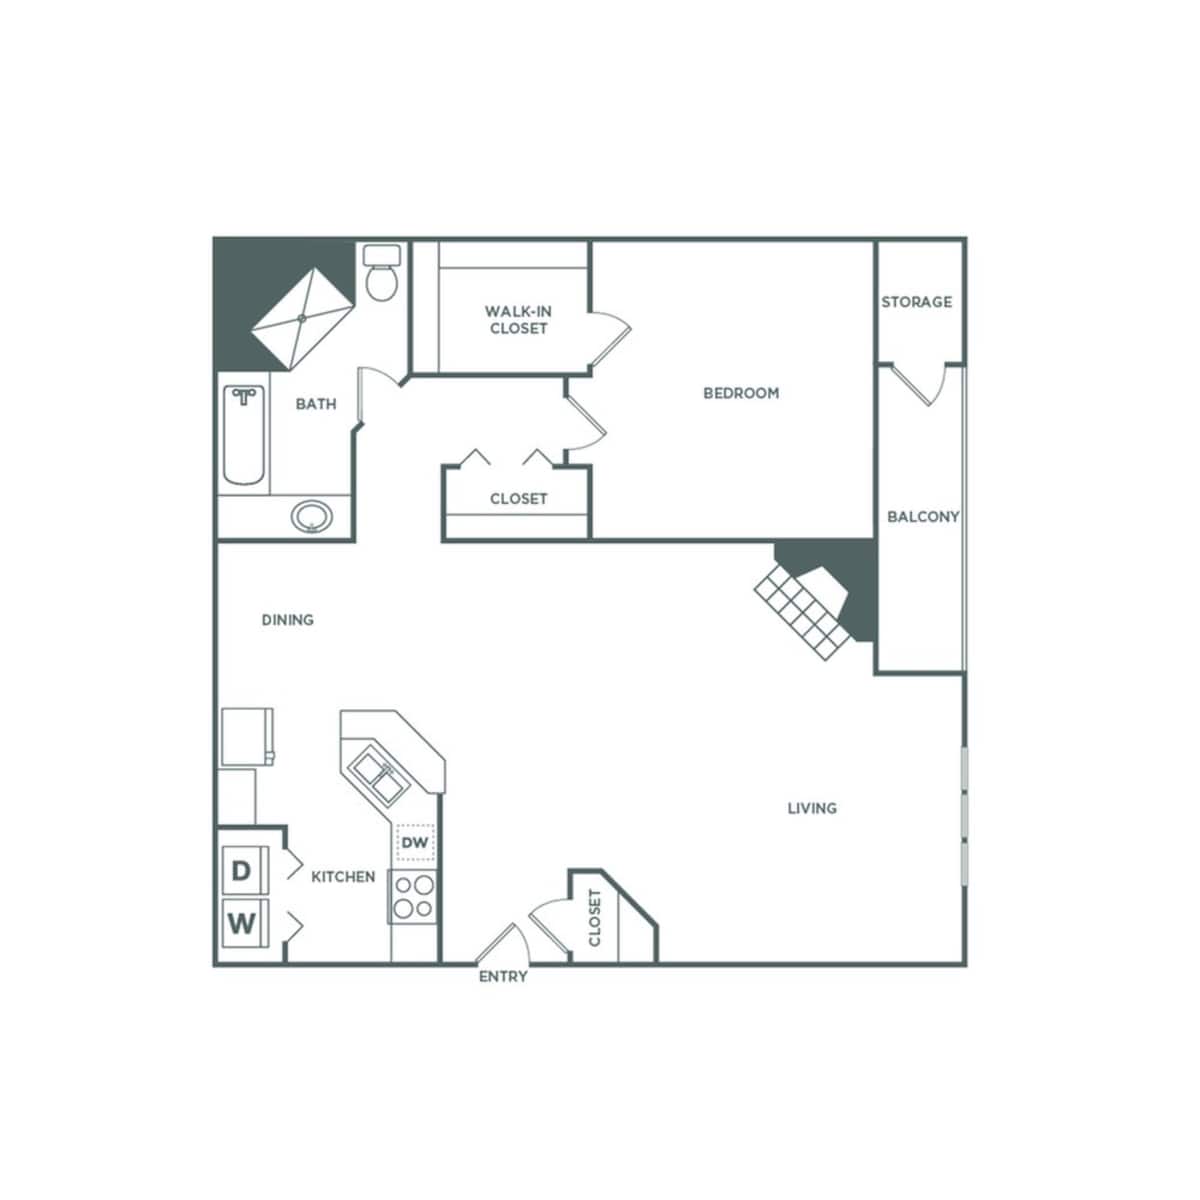 Floorplan diagram for One Bedroom One Bath (900 SF), showing 1 bedroom